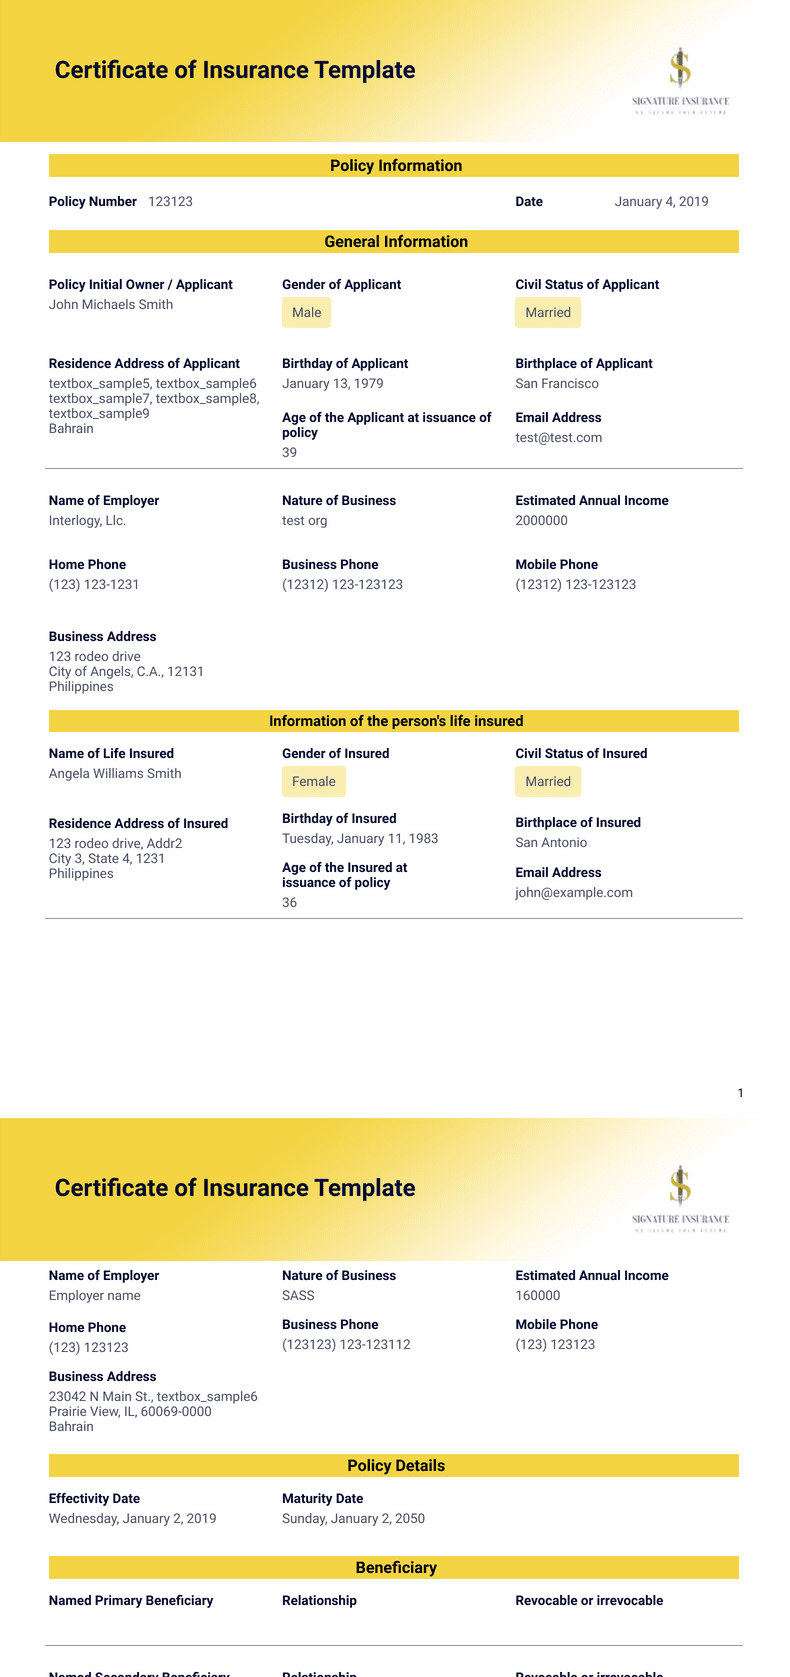 Certificate of Insurance Template